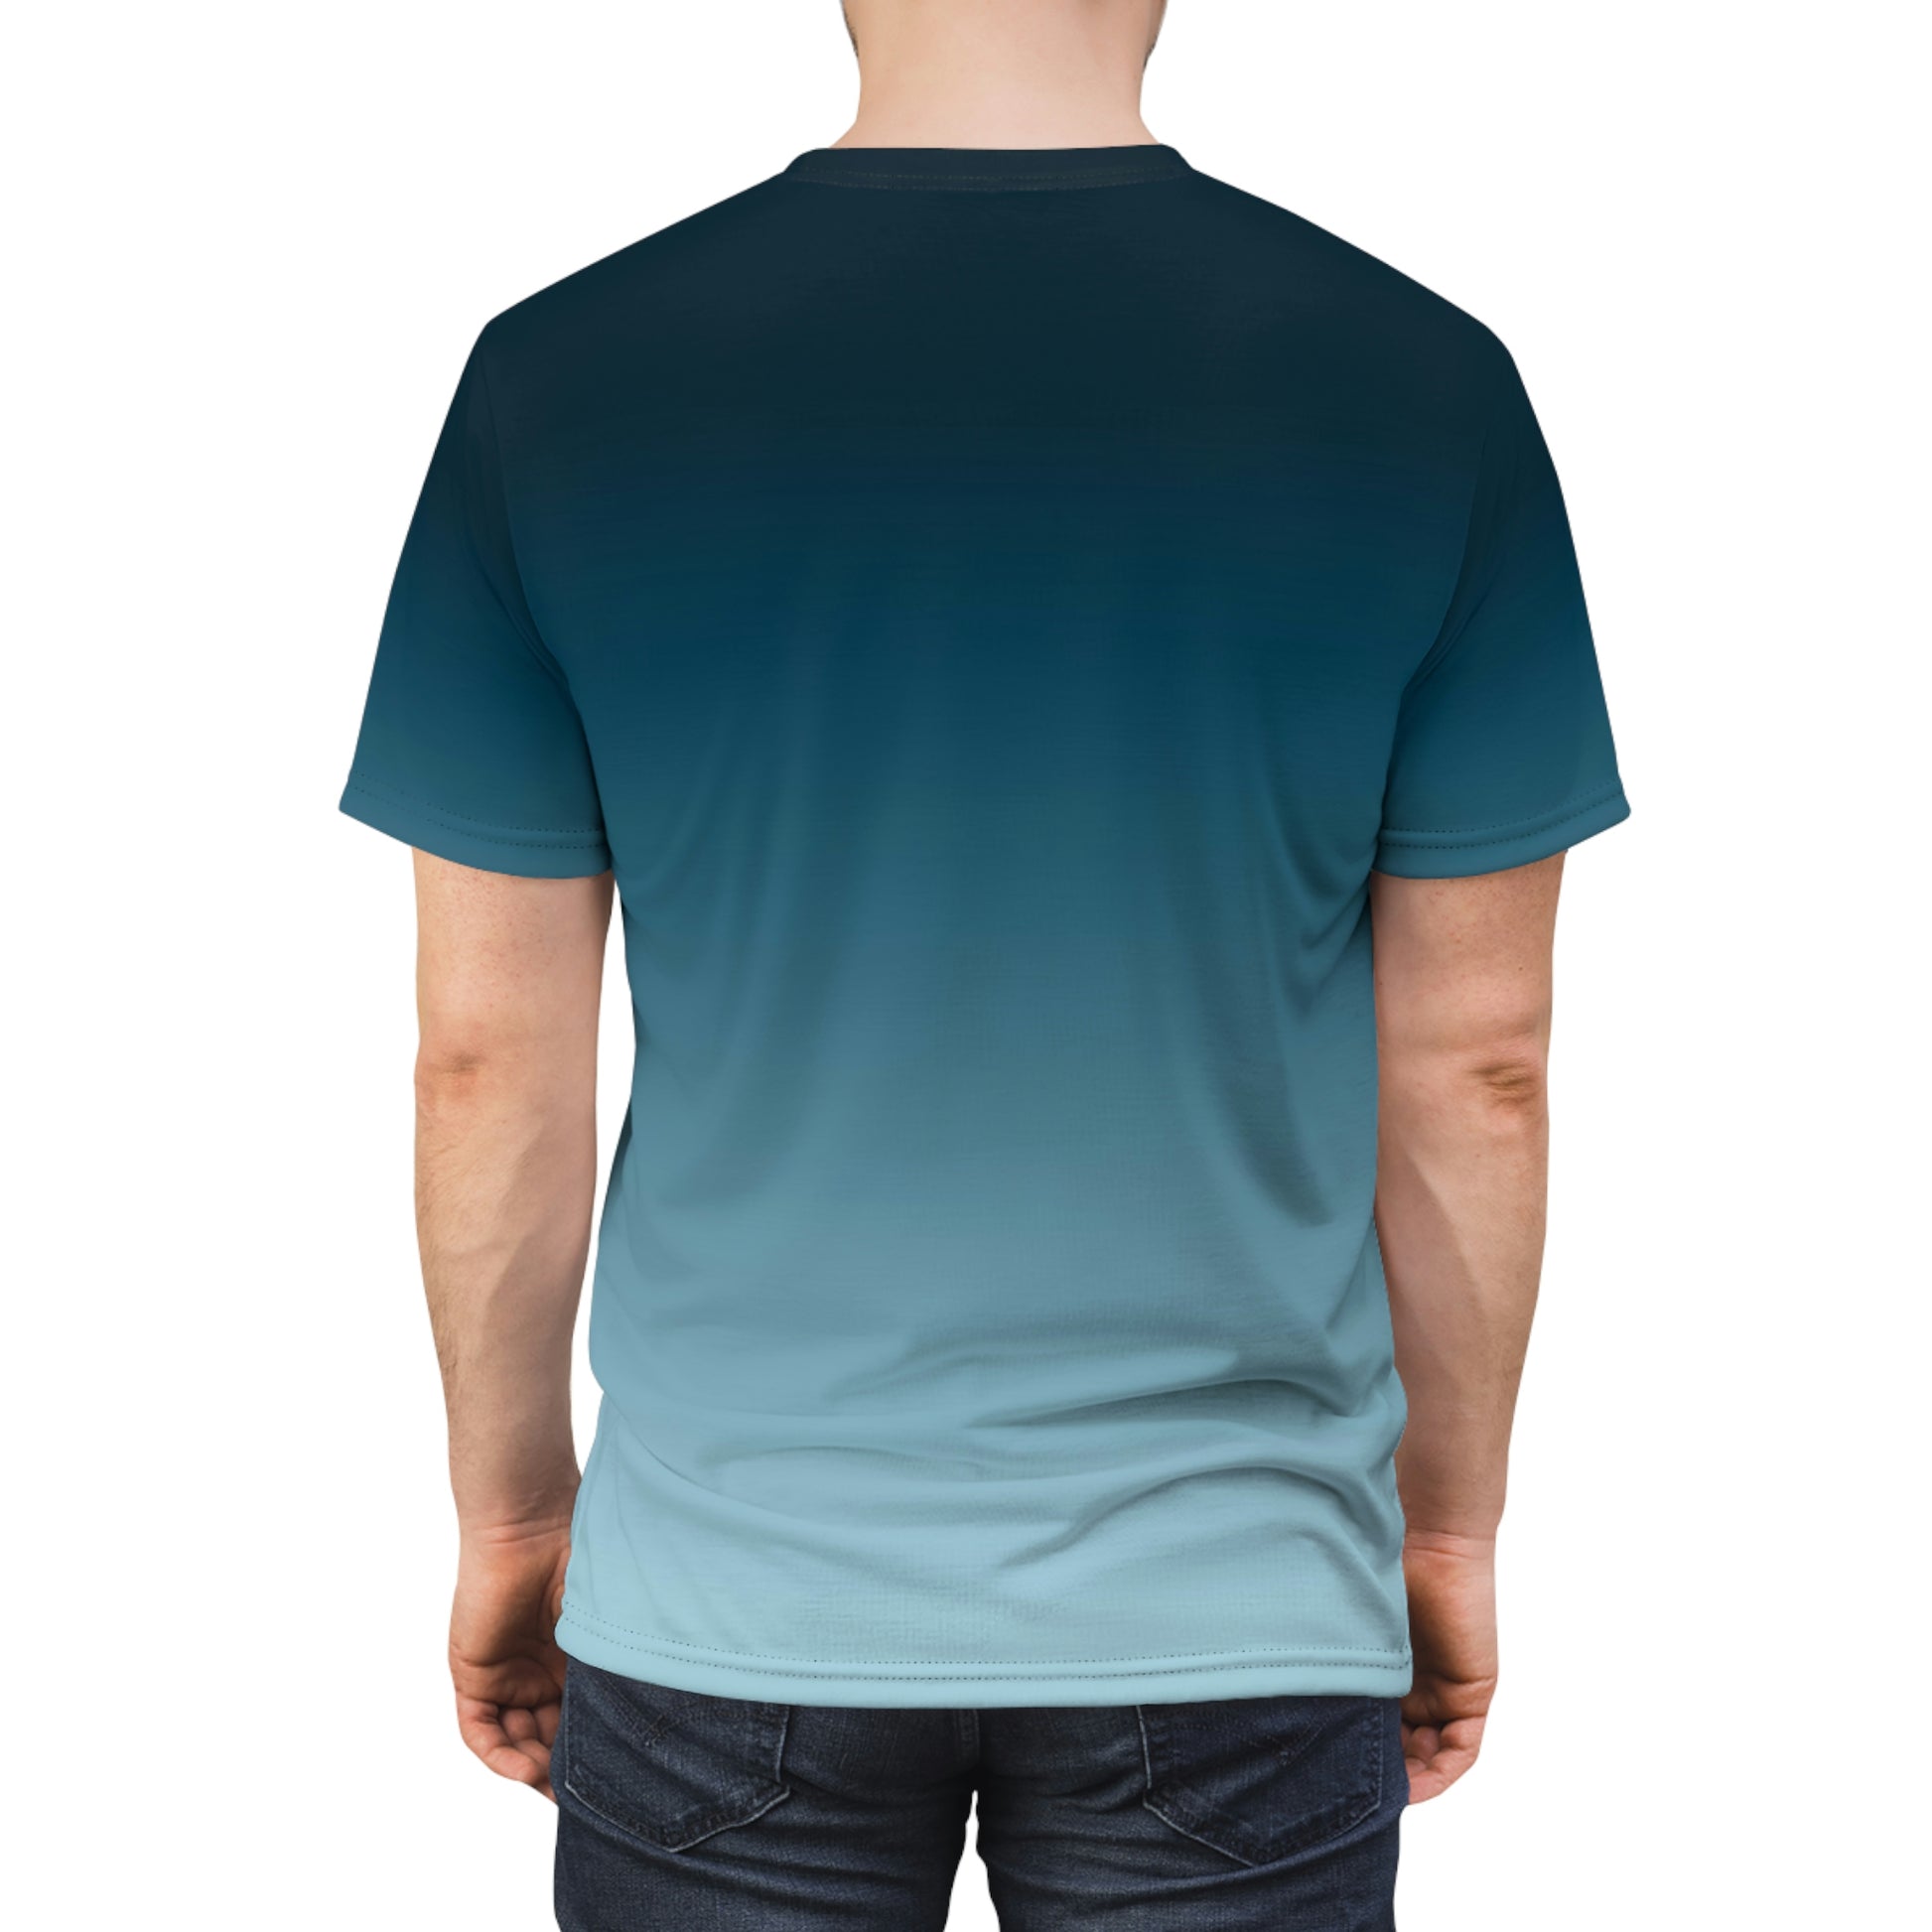 Blue Ombre Tshirt, Dark To Light Gradient Dip Dye Men Women Adult Aesthetic Crewneck Designer Tee Short Sleeve Shirt Top Starcove Fashion